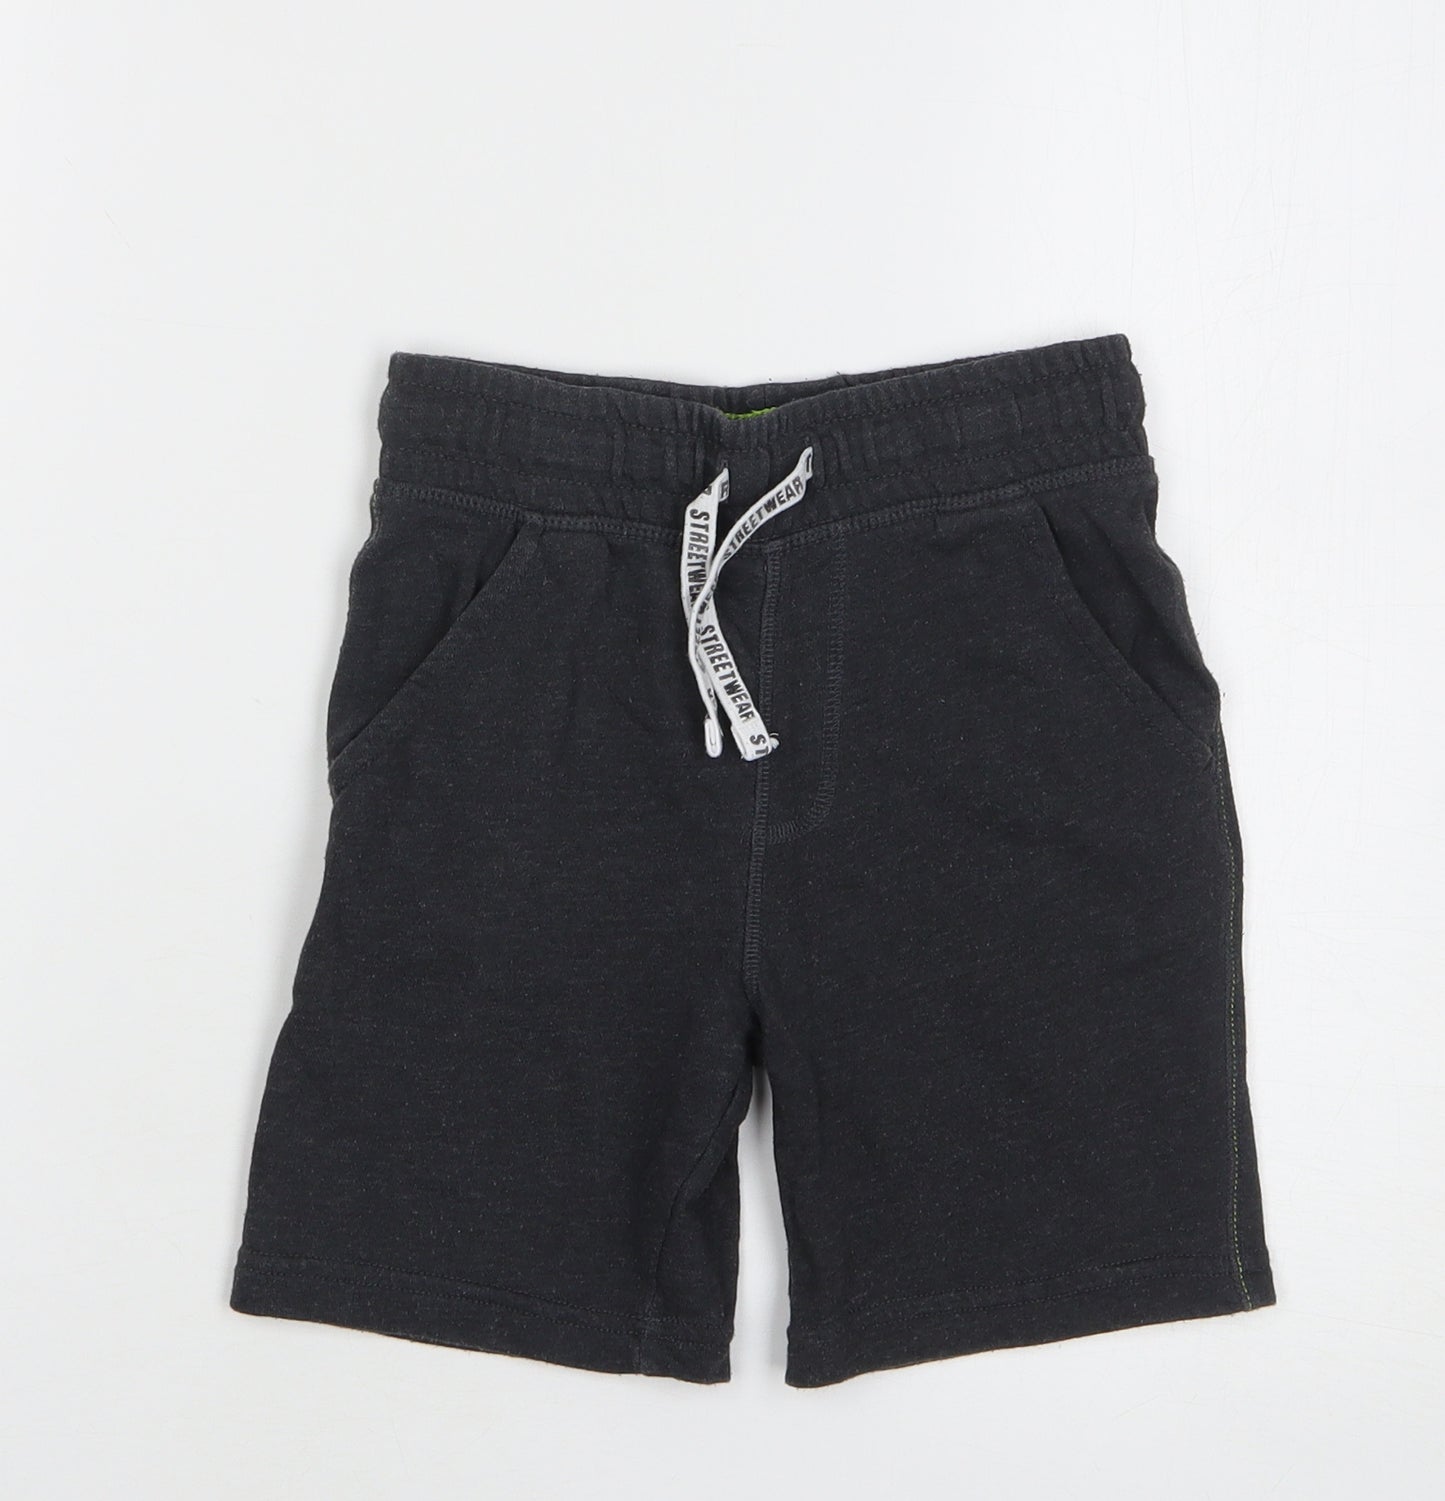 F&F Boys Grey Cotton Sweat Shorts Size 5-6 Years Regular Drawstring